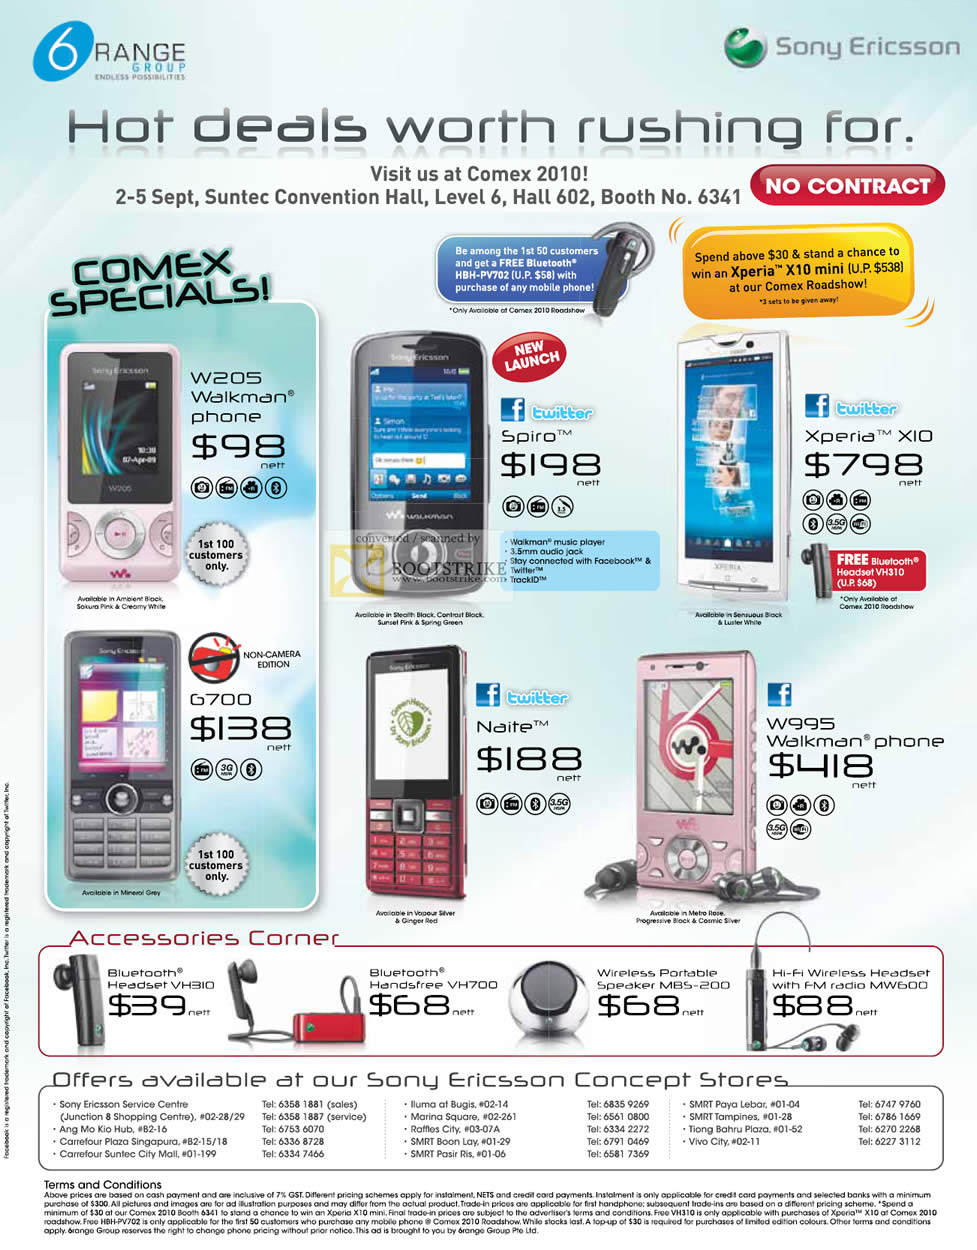 Comex 2010 price list image brochure of 6Range Sony Ericsson Spiro W205 Walkman Xperia X10 G700 Naite W995 Bluetooth Headset VH310 VH700 MBS 200 MW600